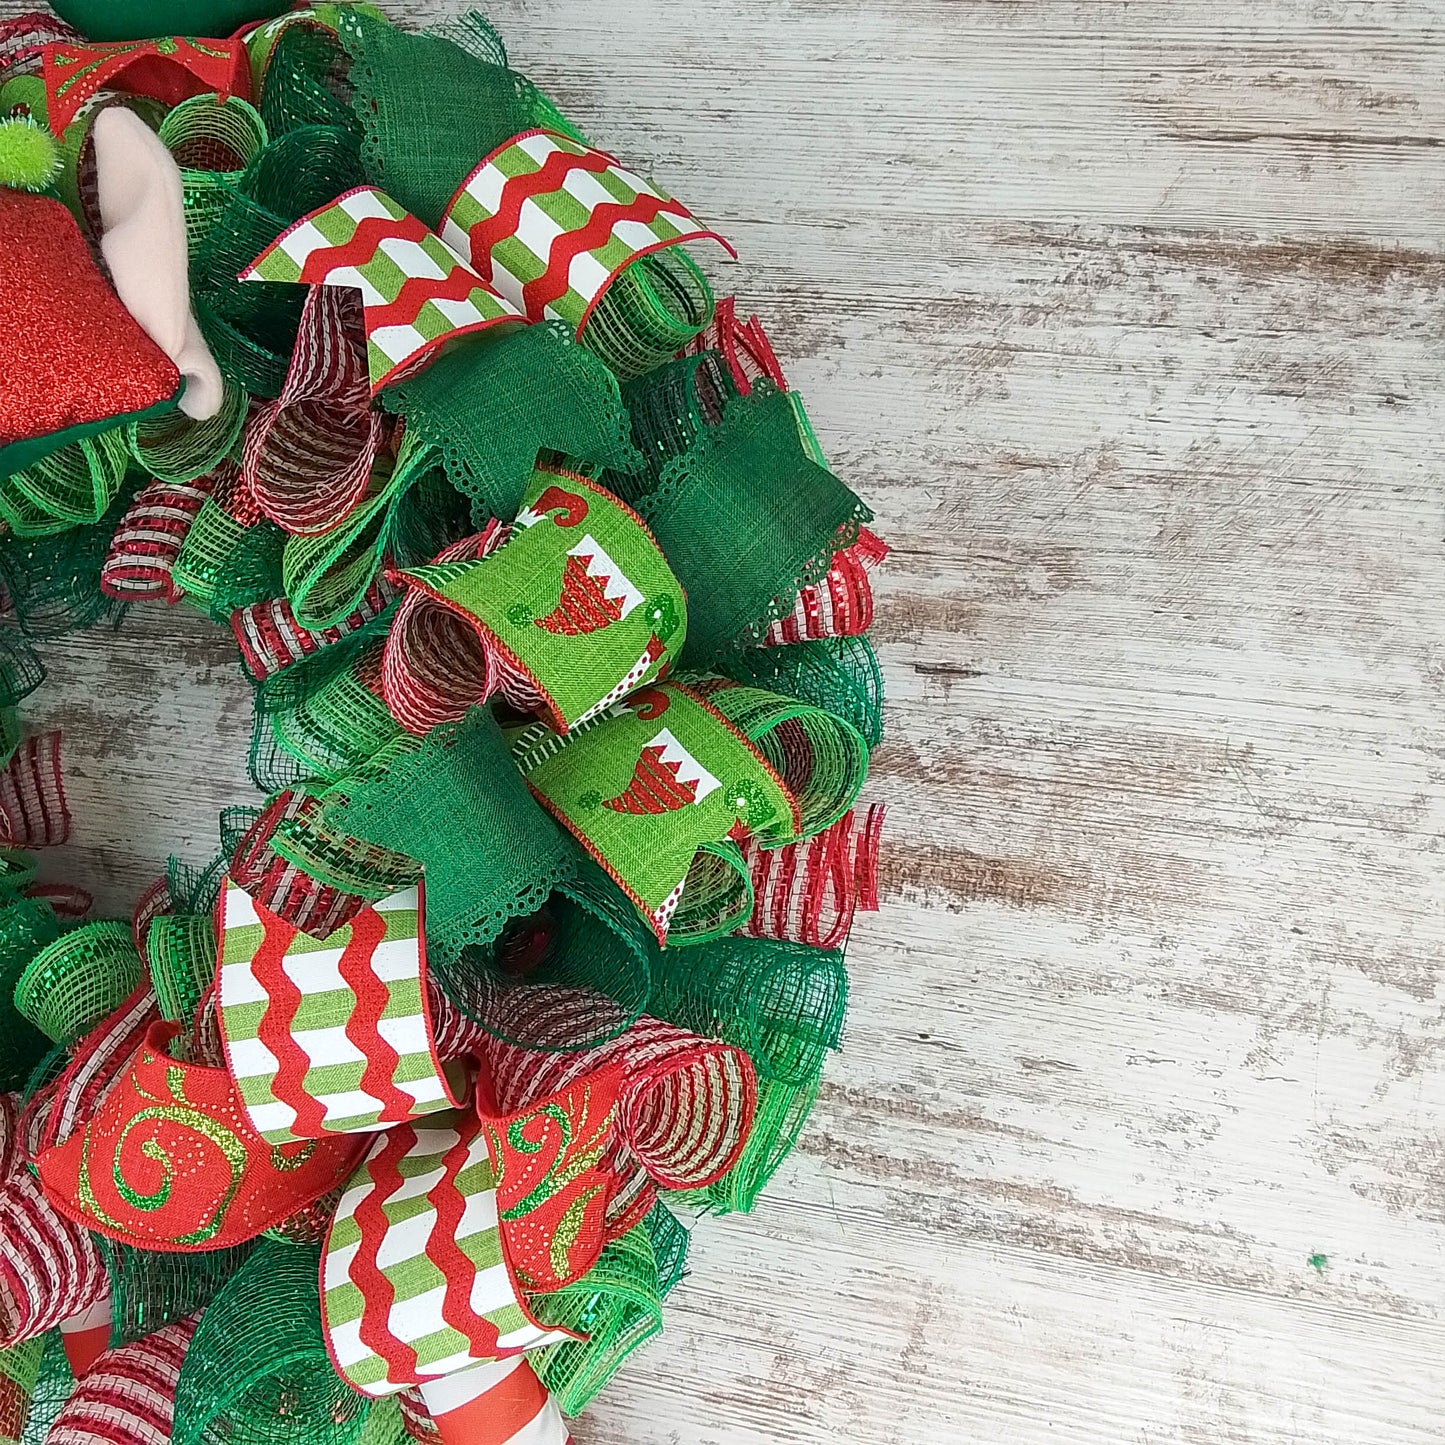 Elf Themed Christmas Wreath, Festive Door Hanger, Holiday Home Decor